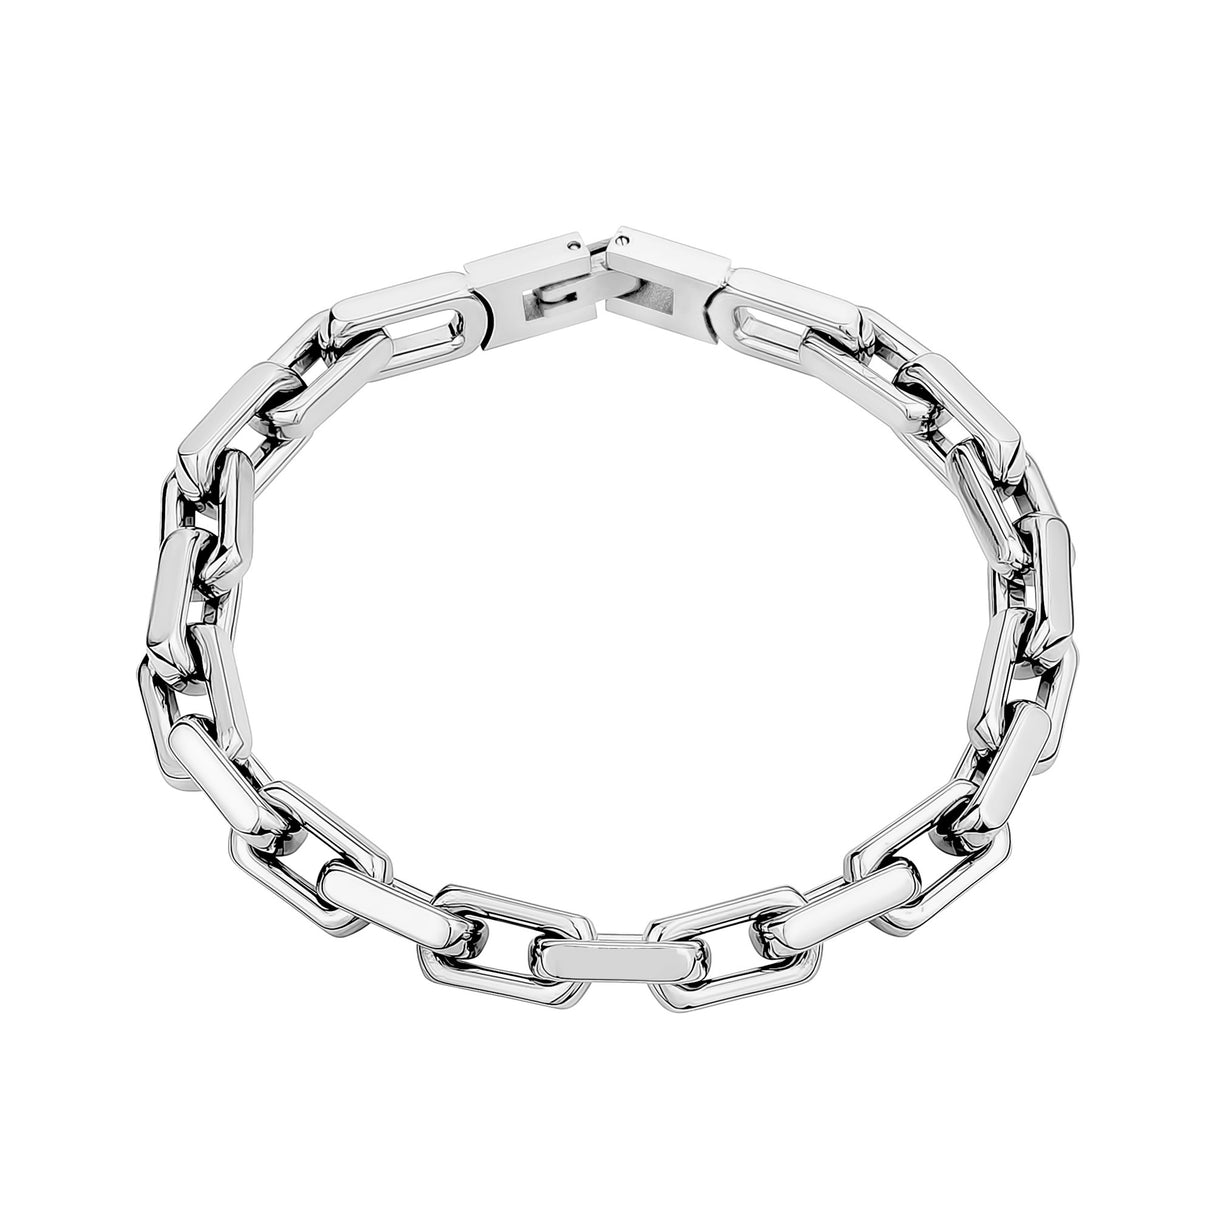 7mm Stainless steel elongated link bracelet for men